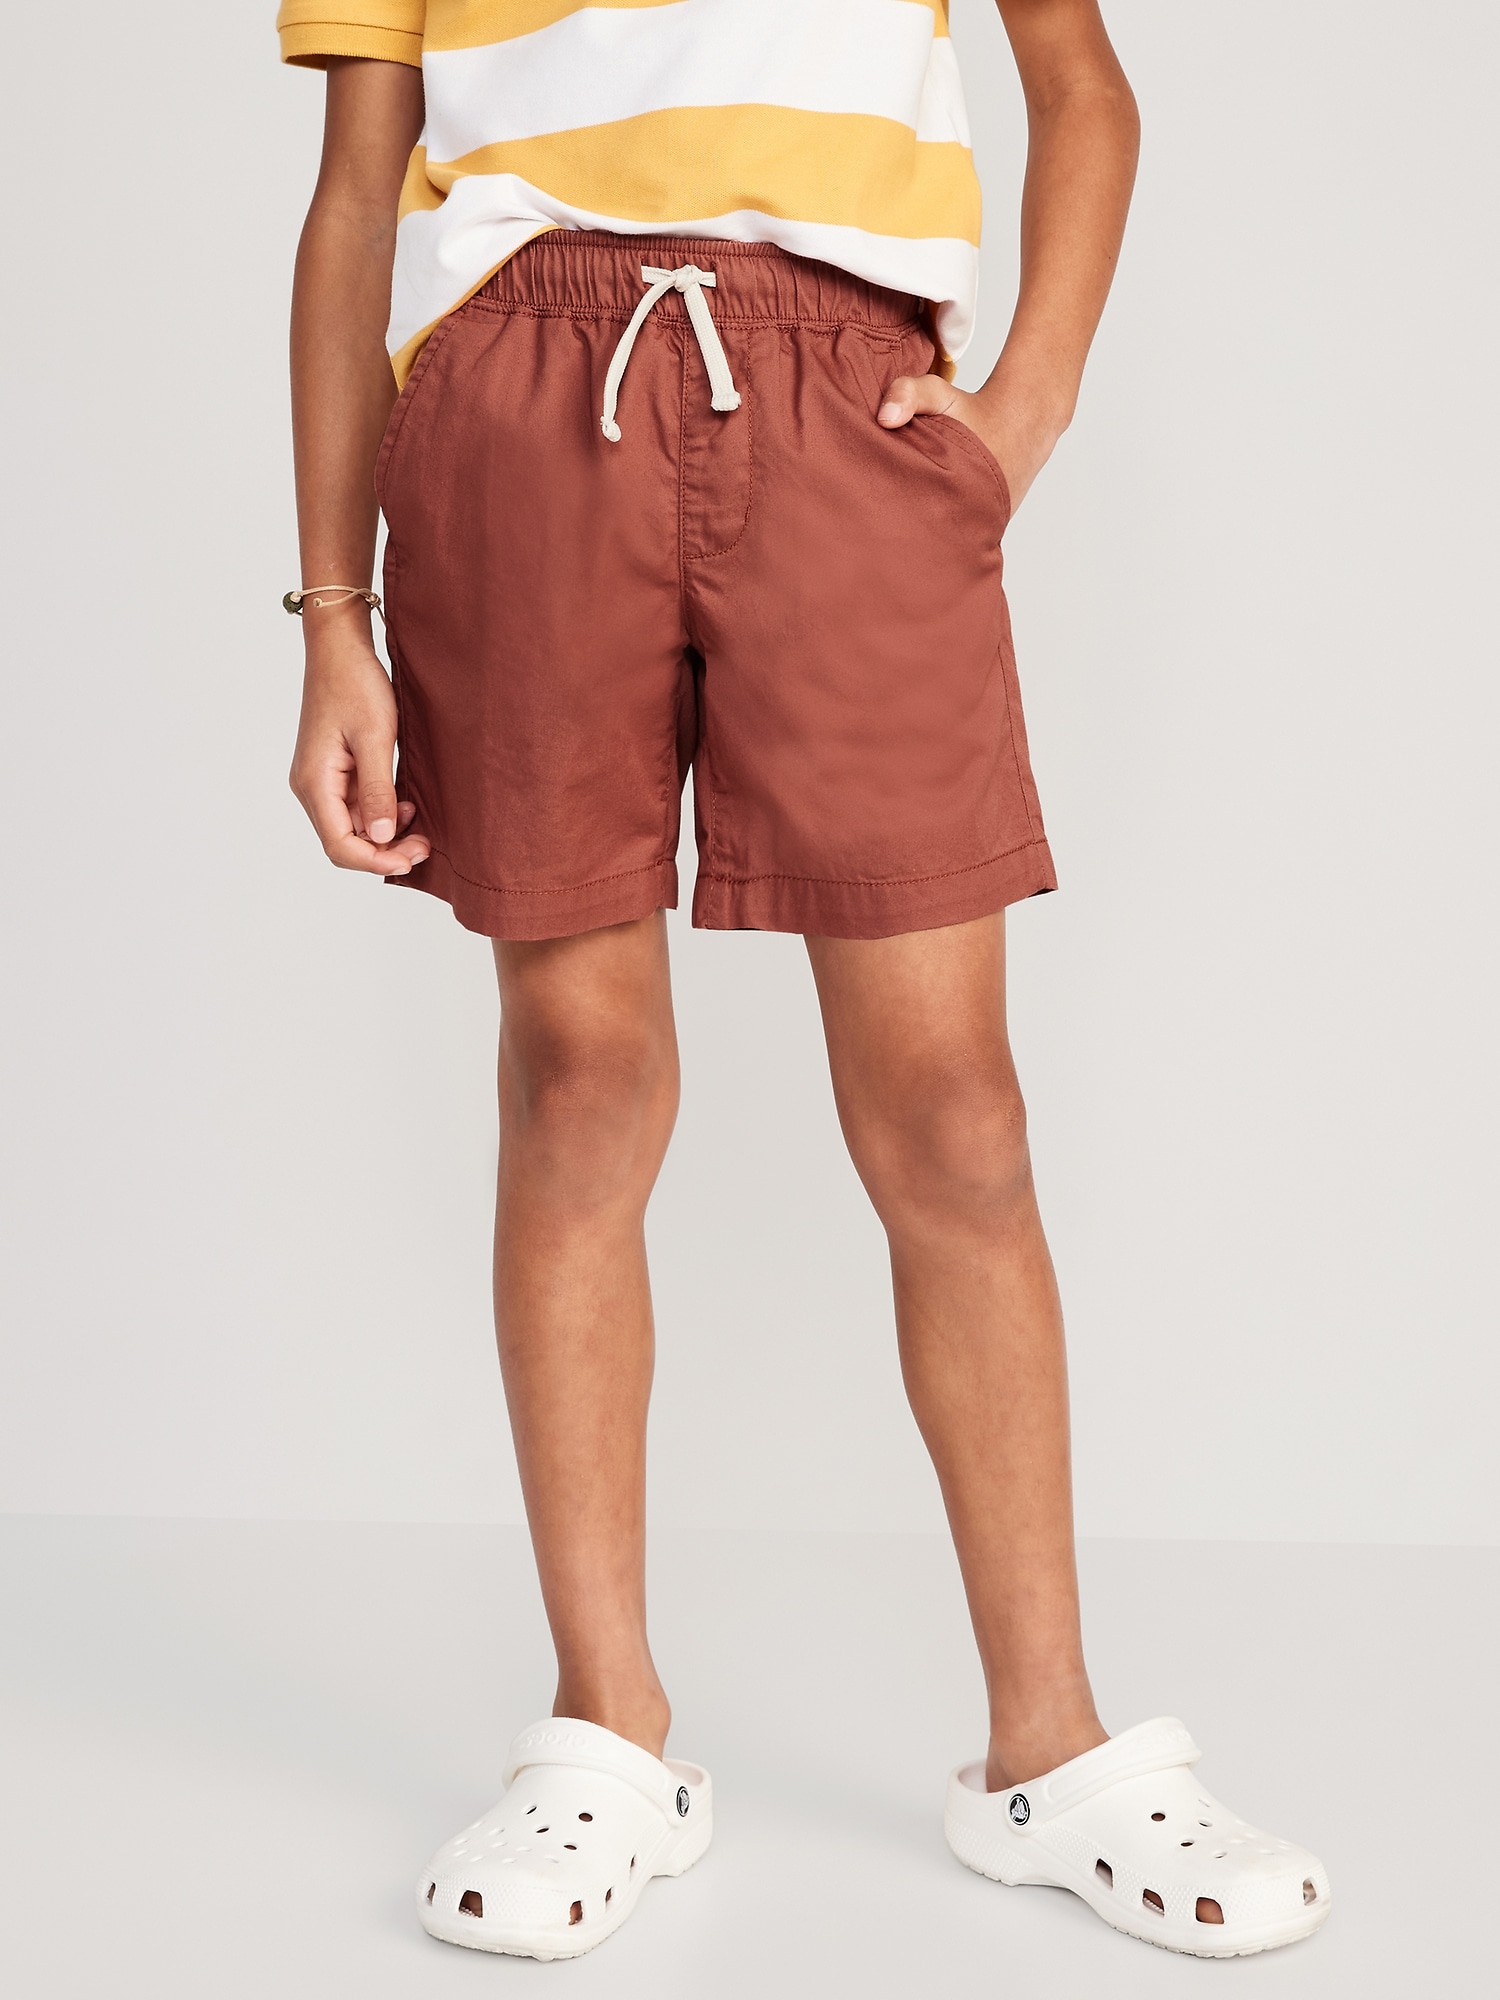 Old Navy Kids' School Uniform Twill Bermuda Shorts - - Plus Size 12